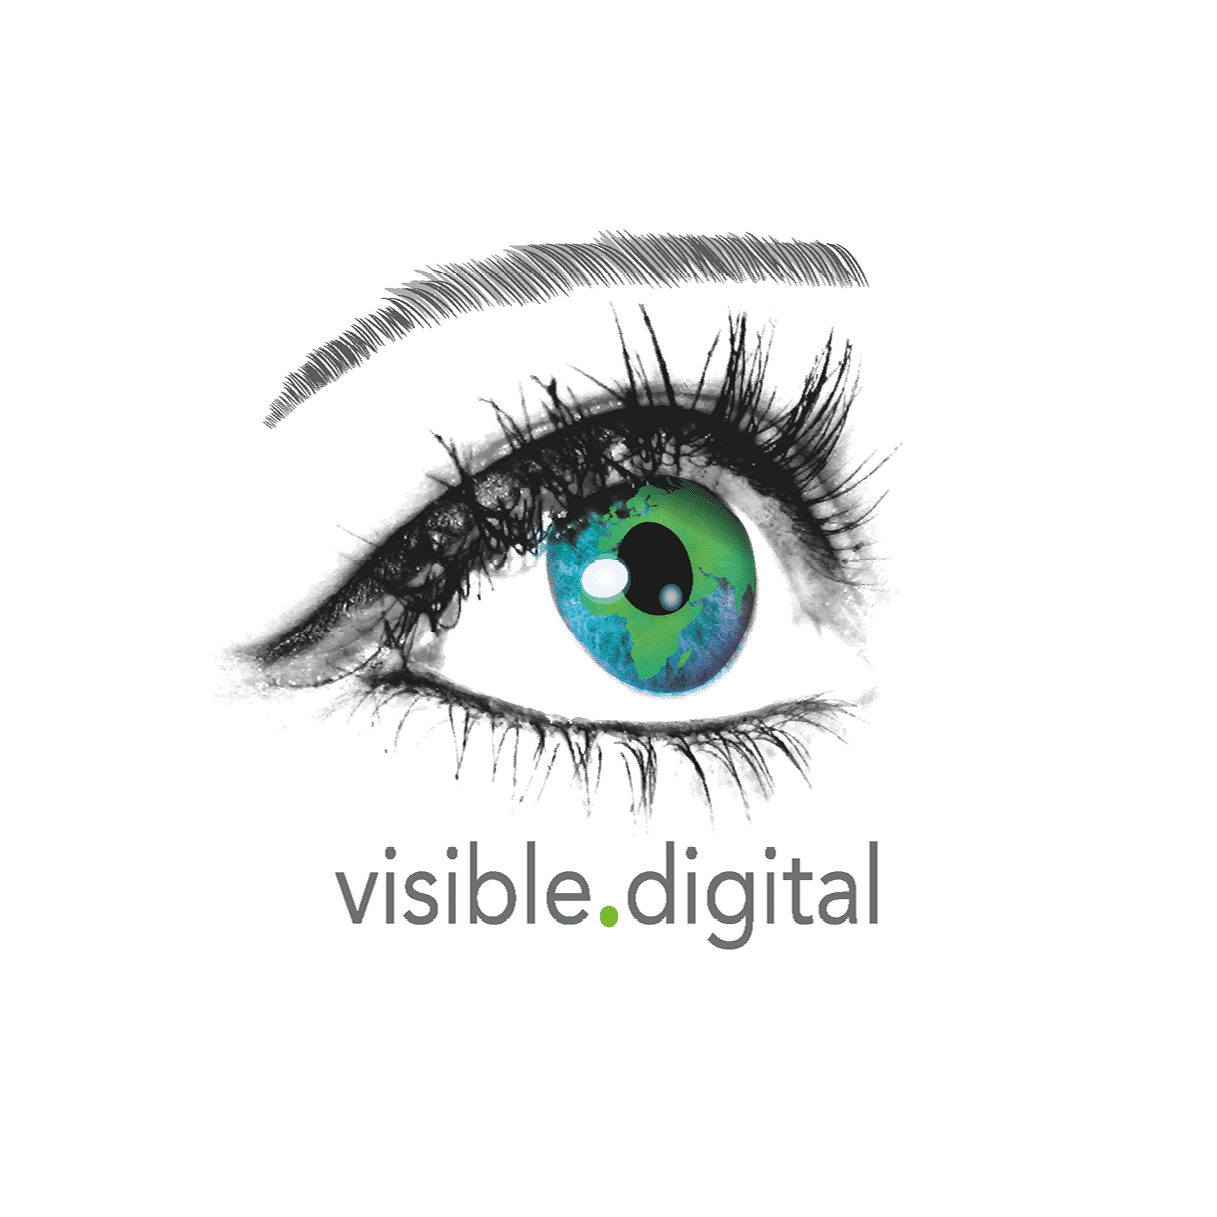 Visible digital